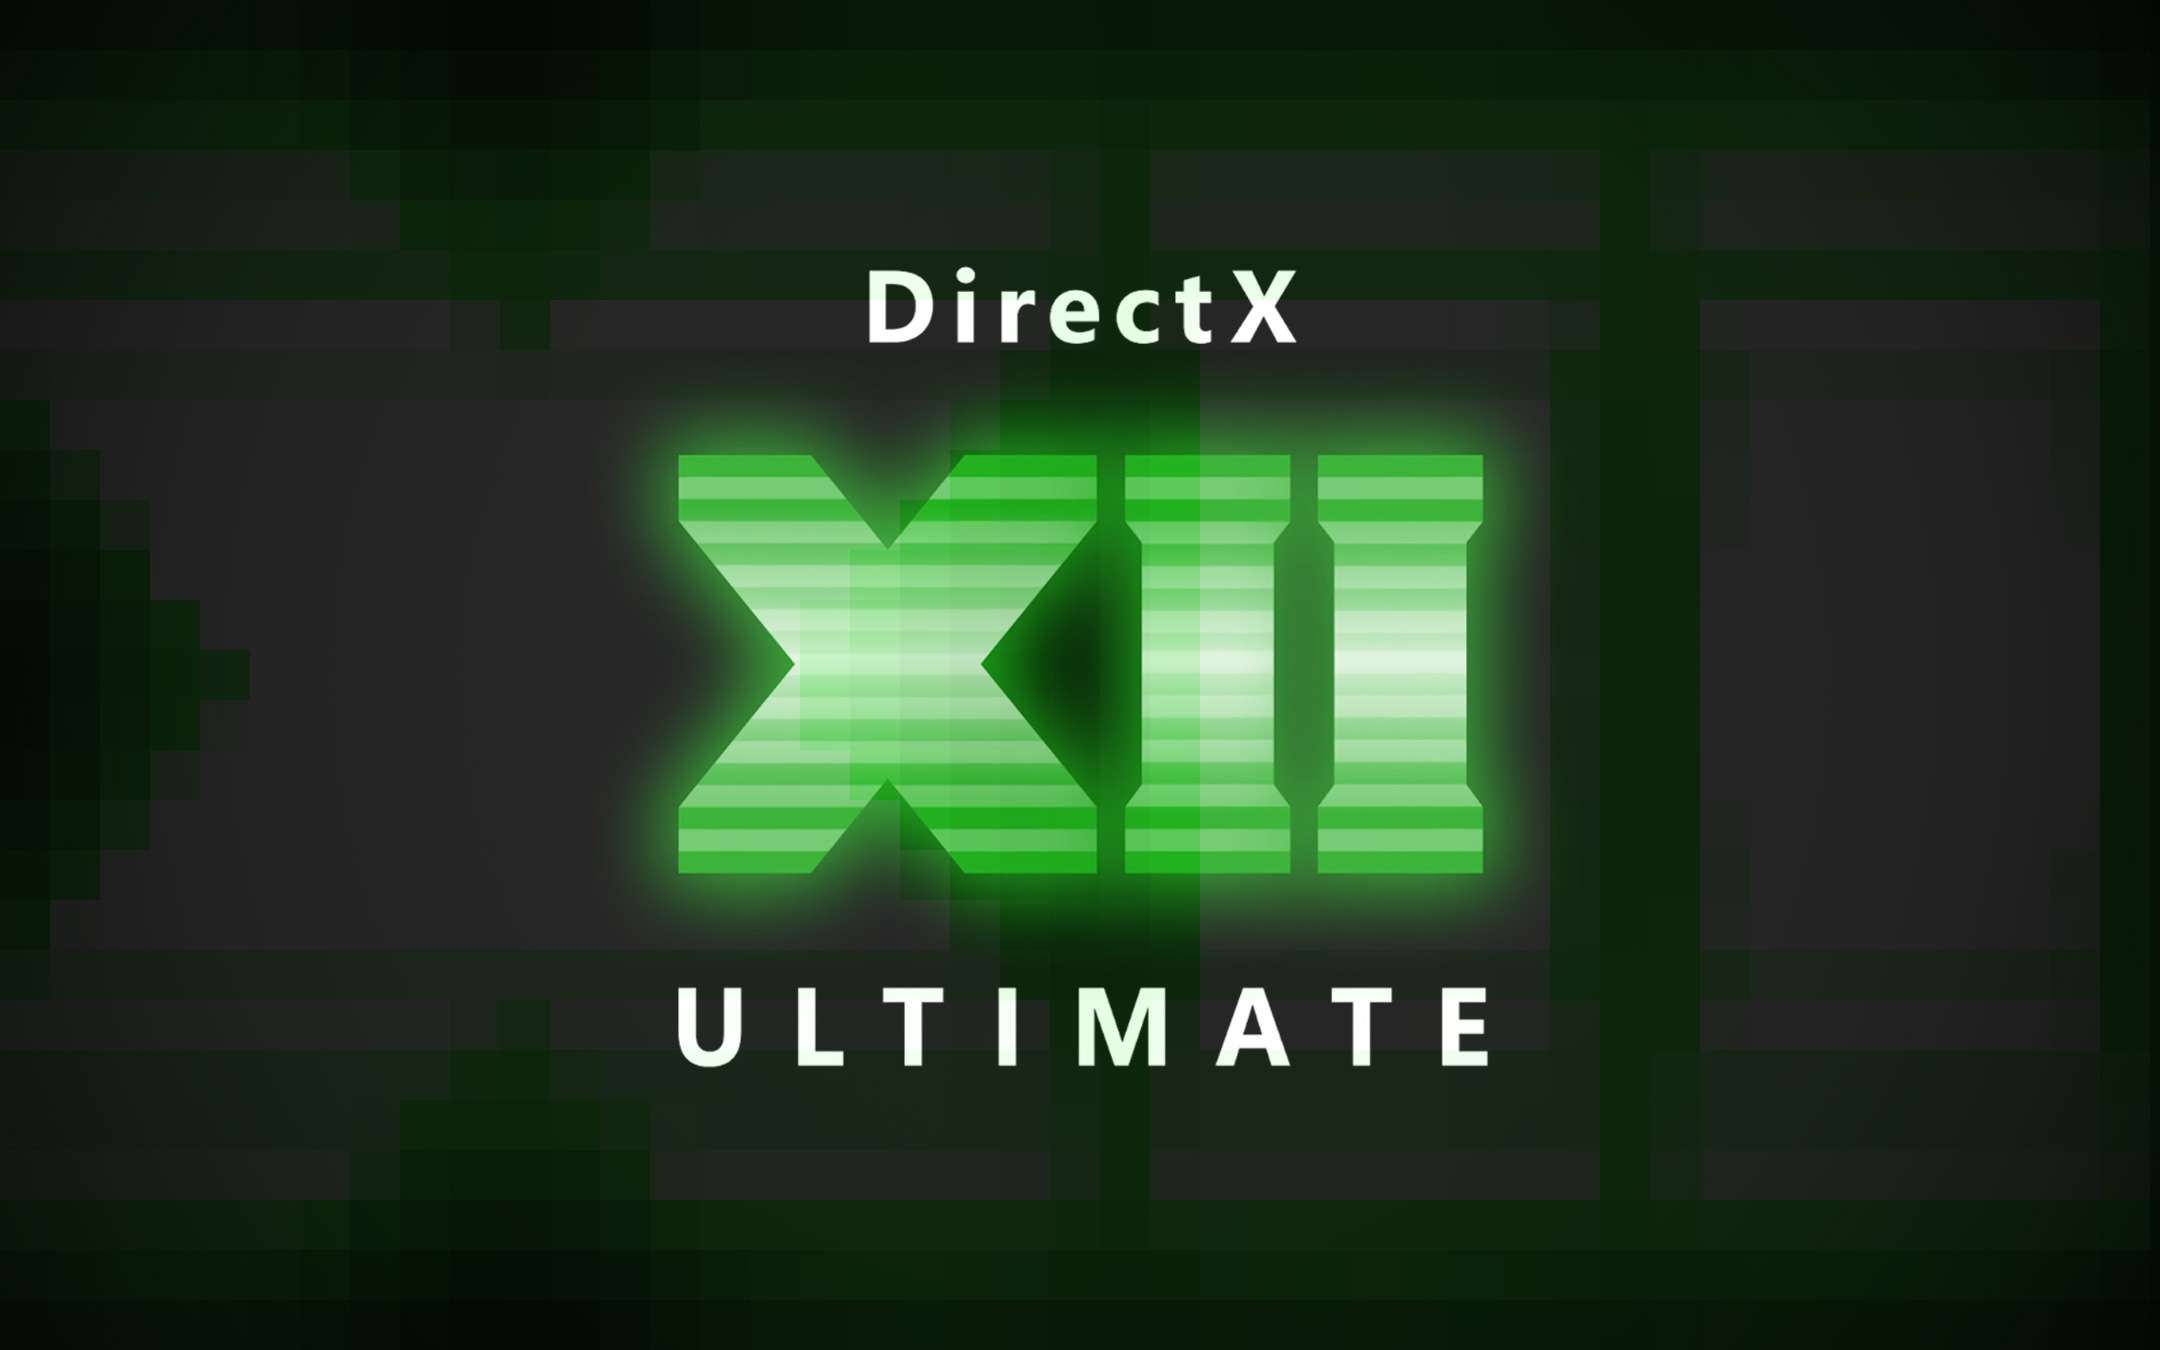 directx 12 ultimate download intel